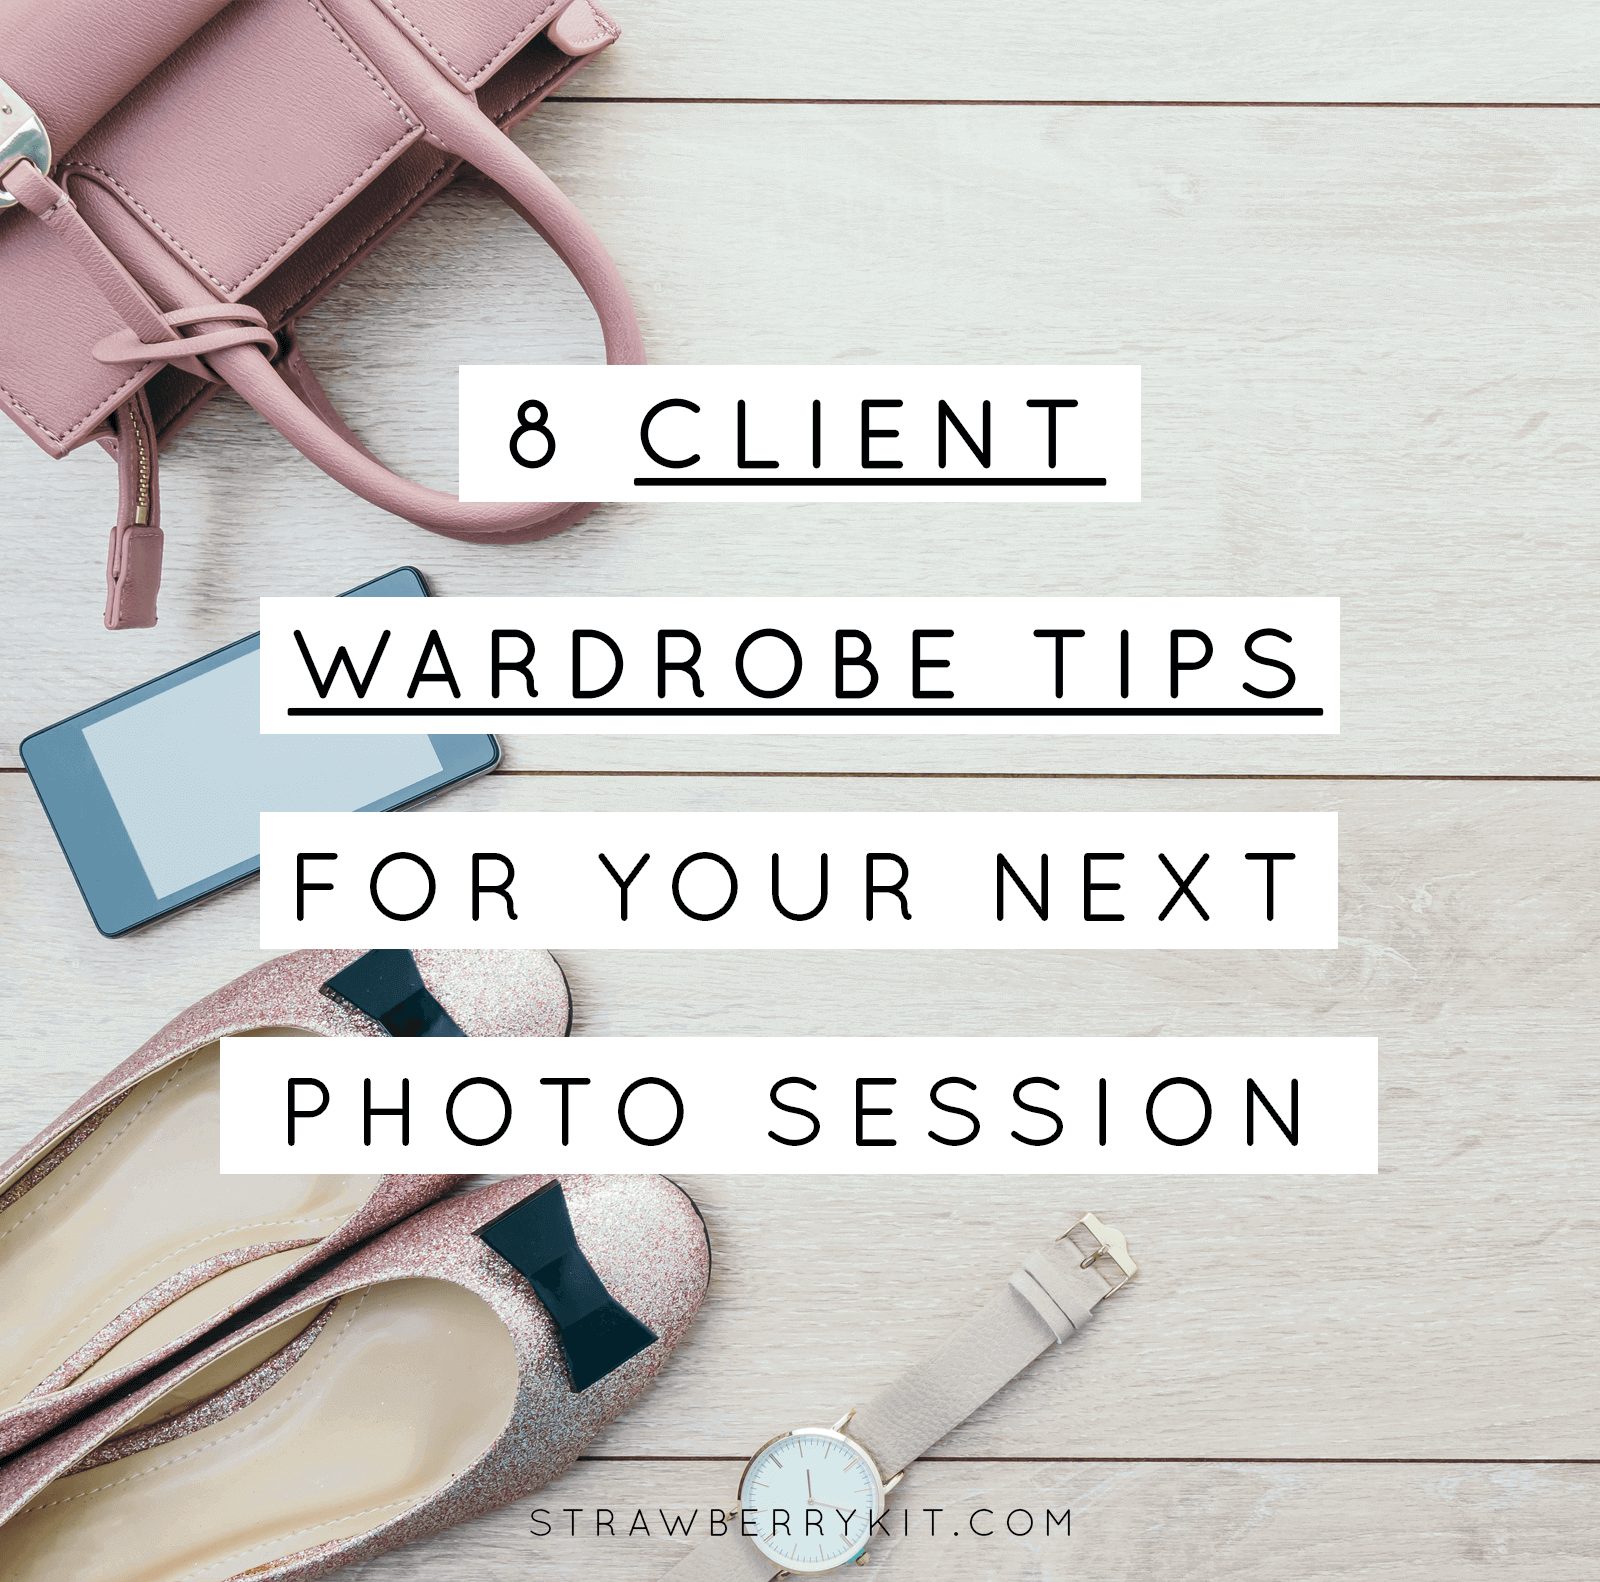 Client wardrobe tips photographer